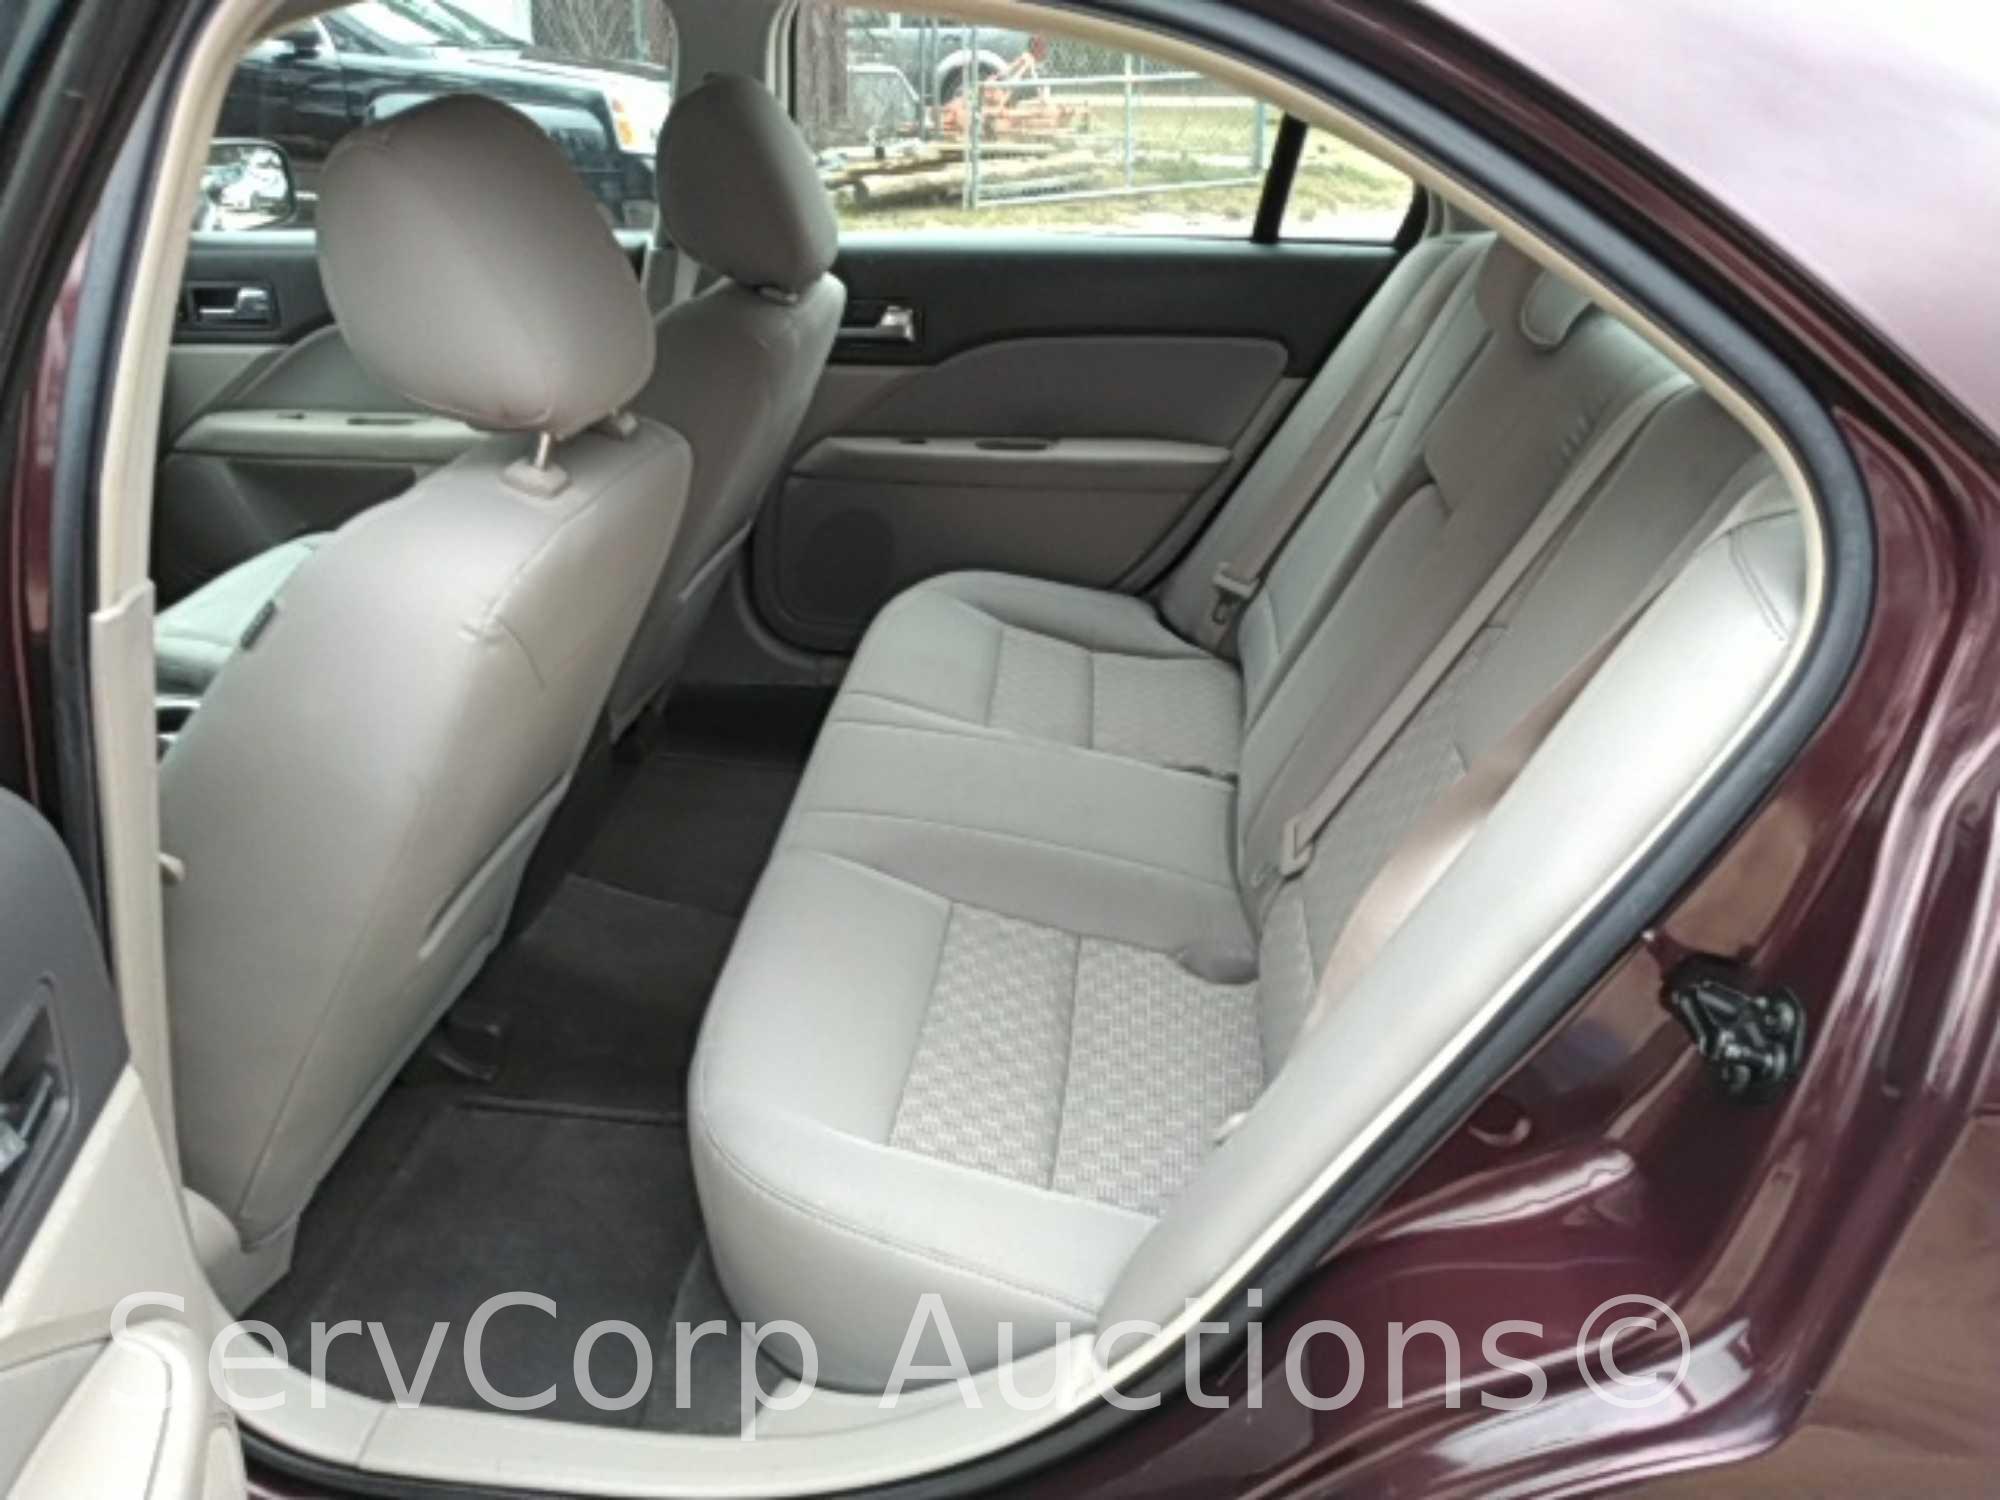 2011 Ford Fusion Passenger Car, VIN # 3FAHP0HG0BR322310